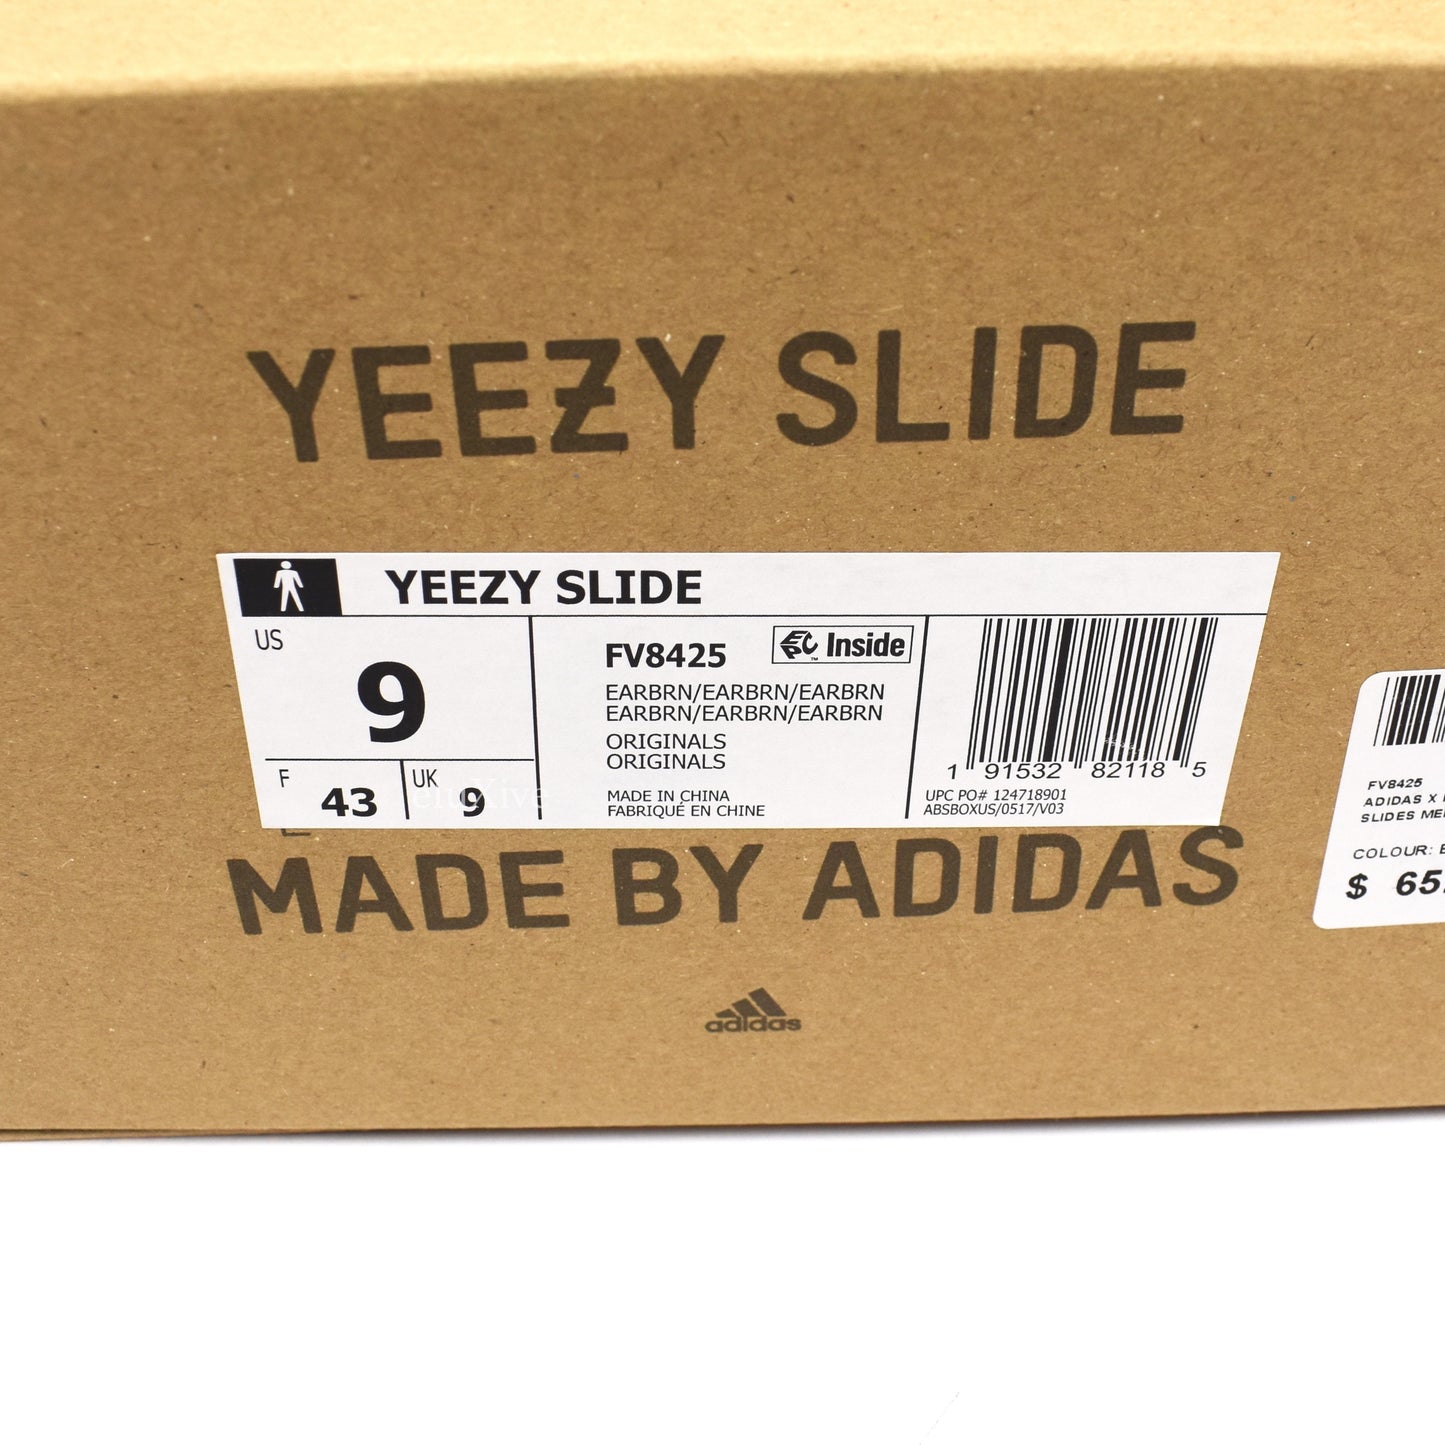 Adidas x Kanye West - Yeezy Slides (Earth Brown)